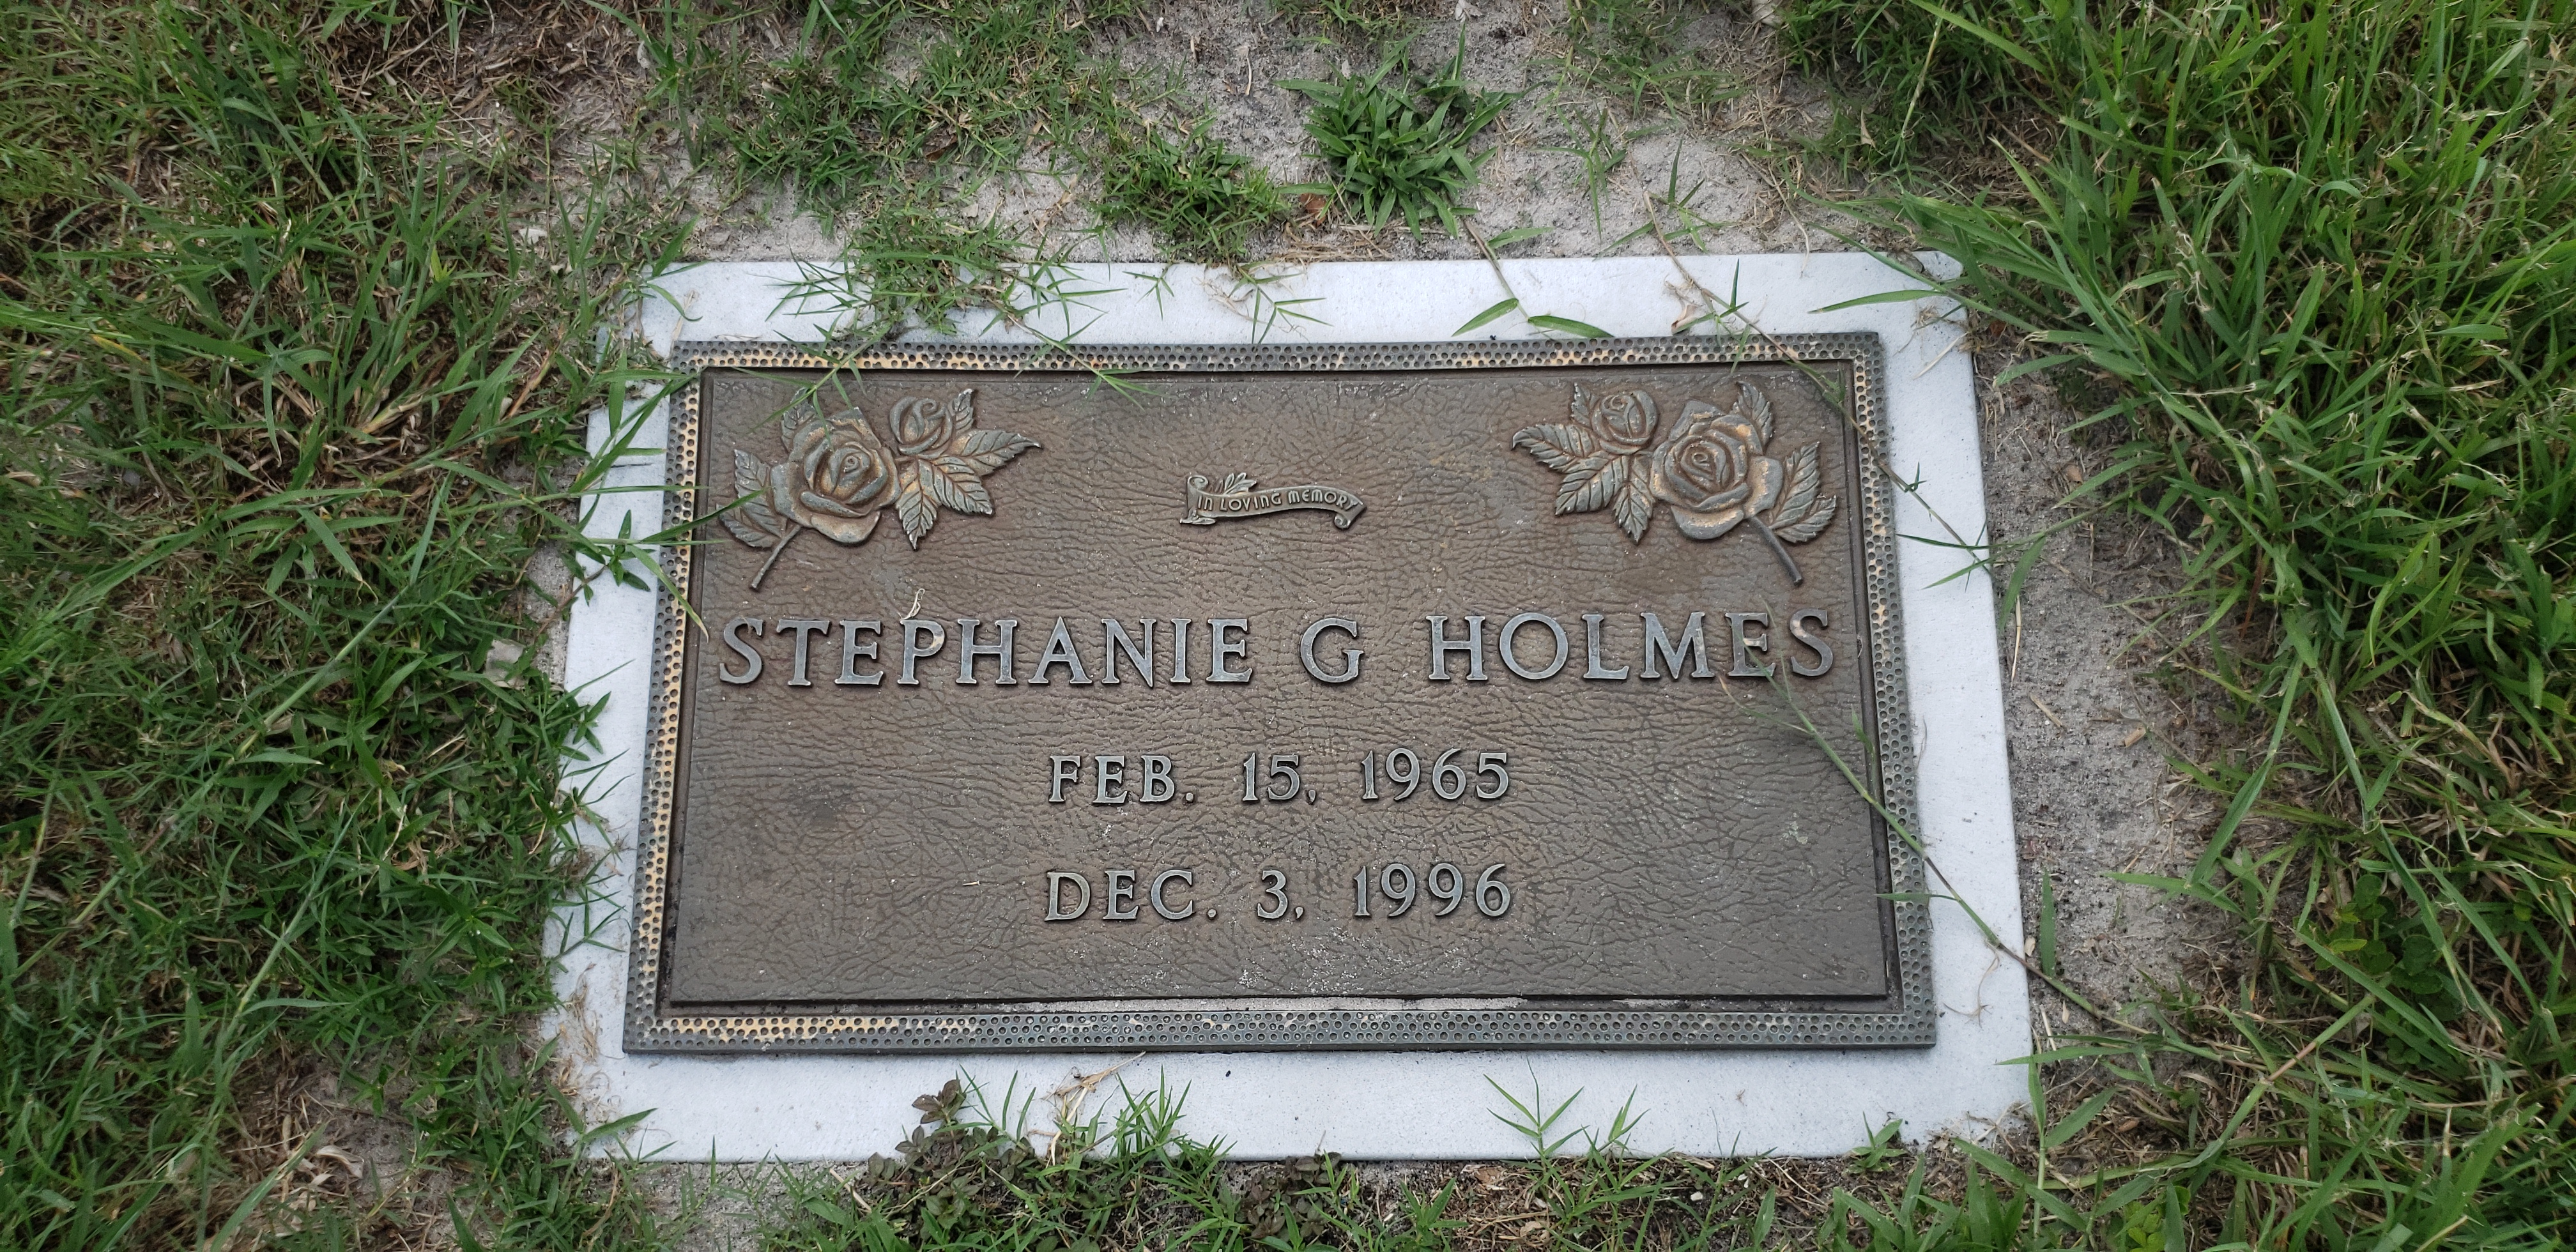 Stephanie G Holmes